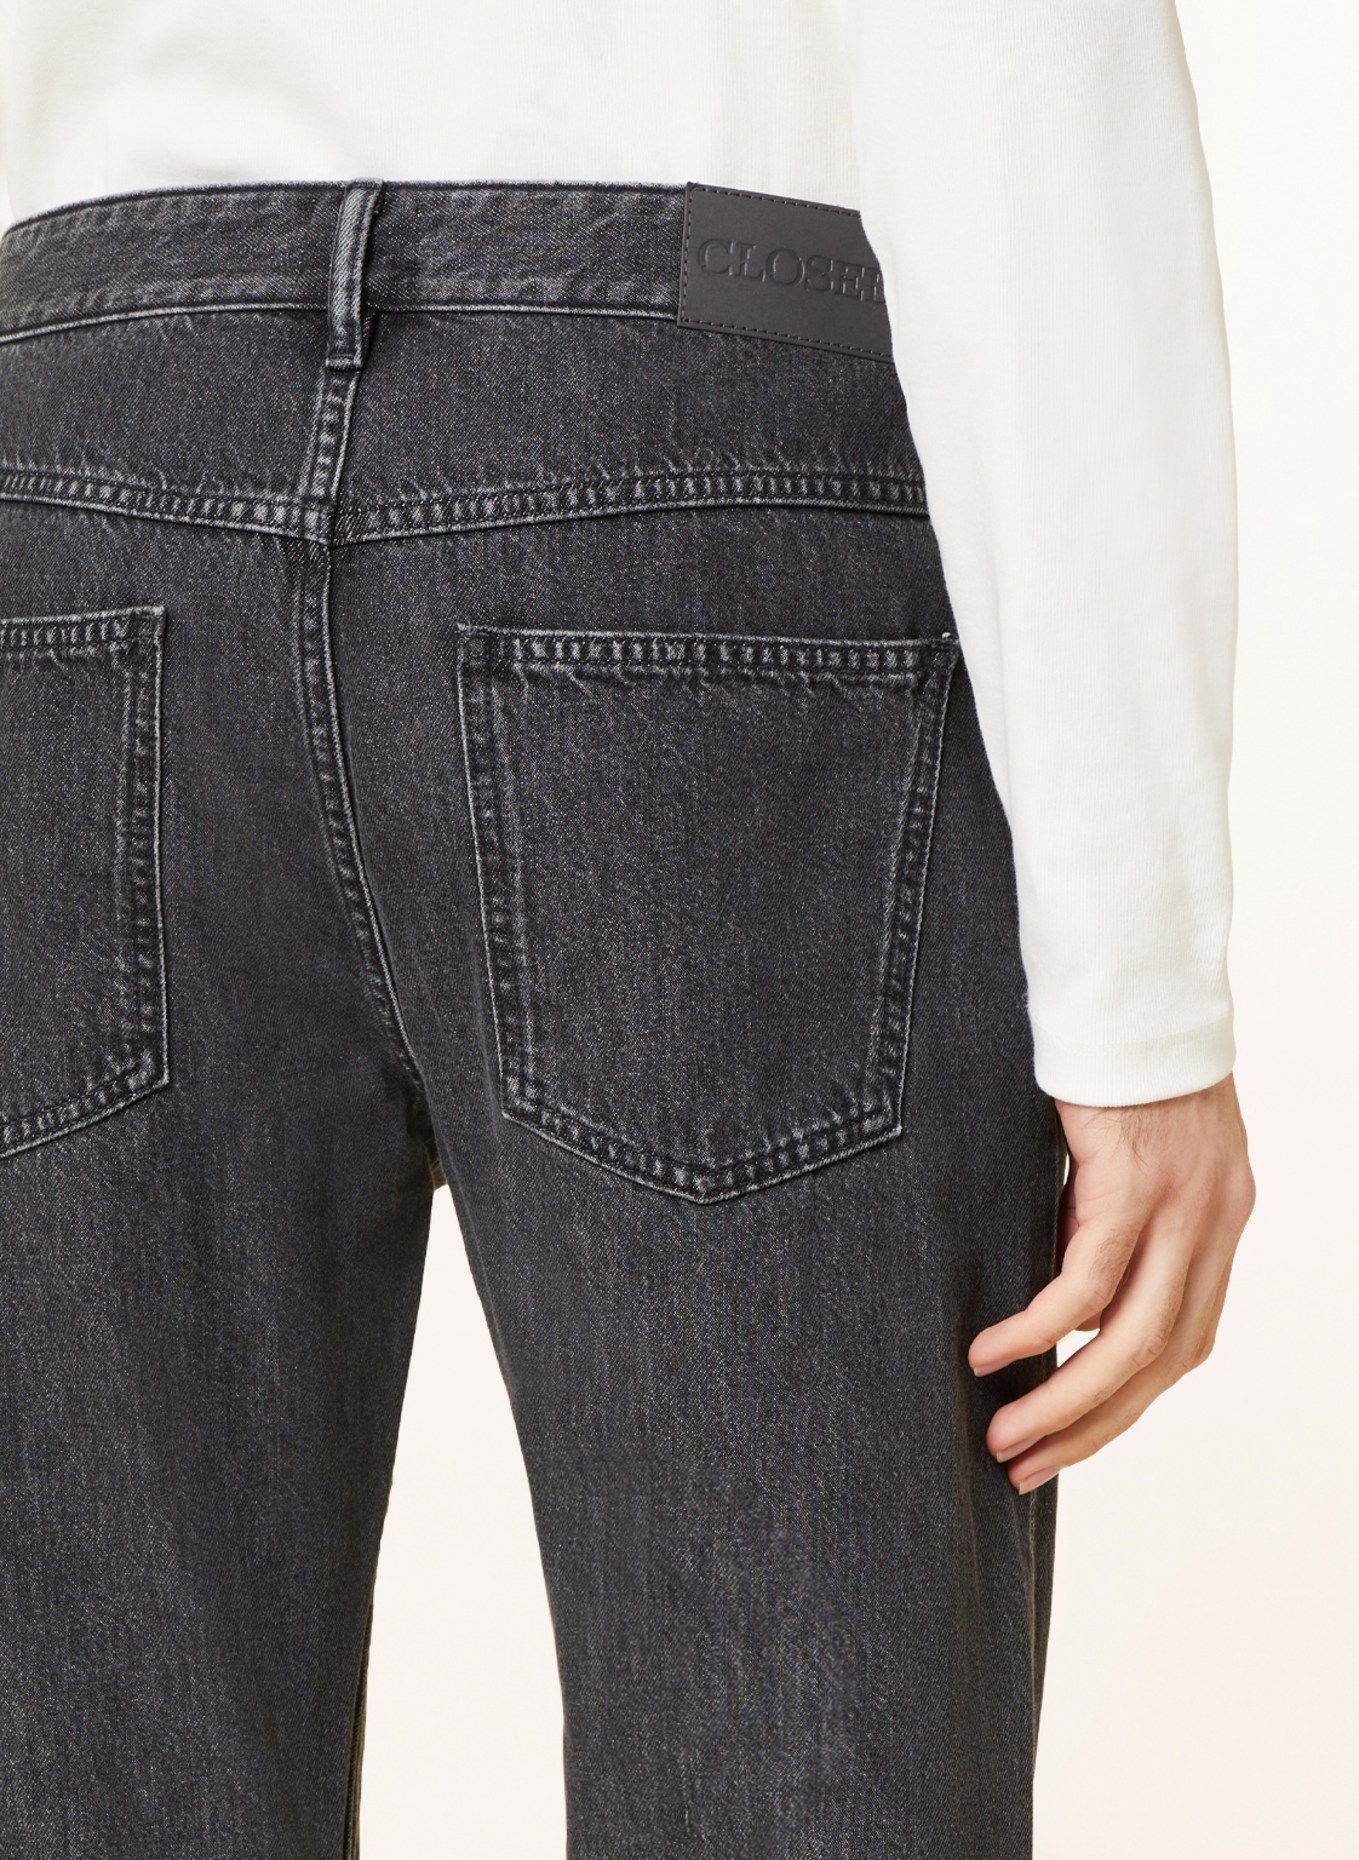 CLOSED Jeans COOPER TRUE Tapered Fit, Farbe: DGY DARK GREY (Bild 6)